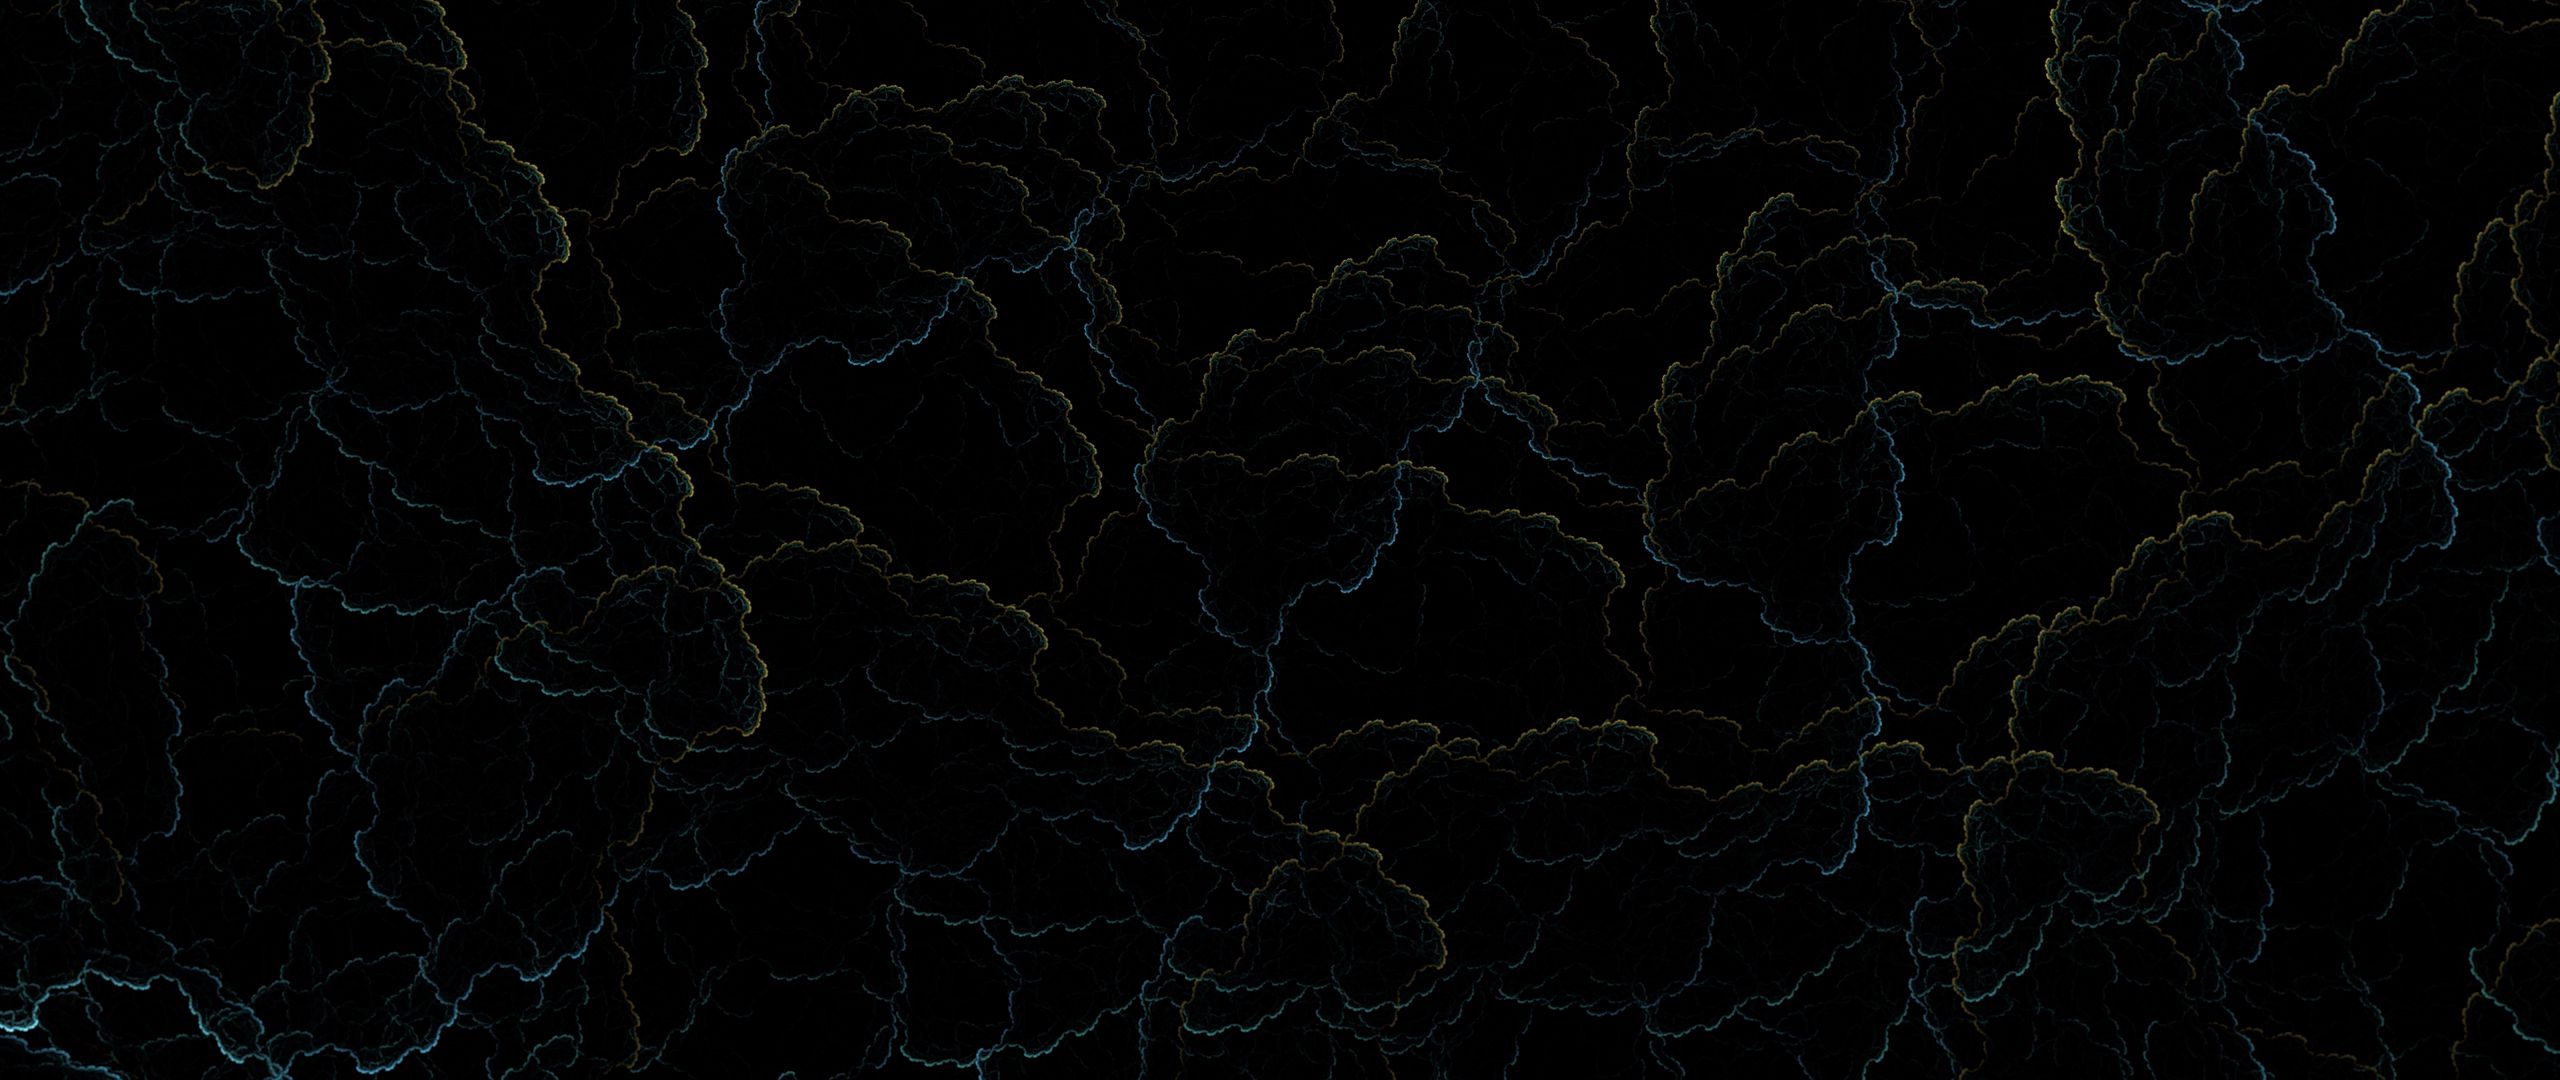 Download wallpaper x black dark fractal spots abstraction dual wide p hd background